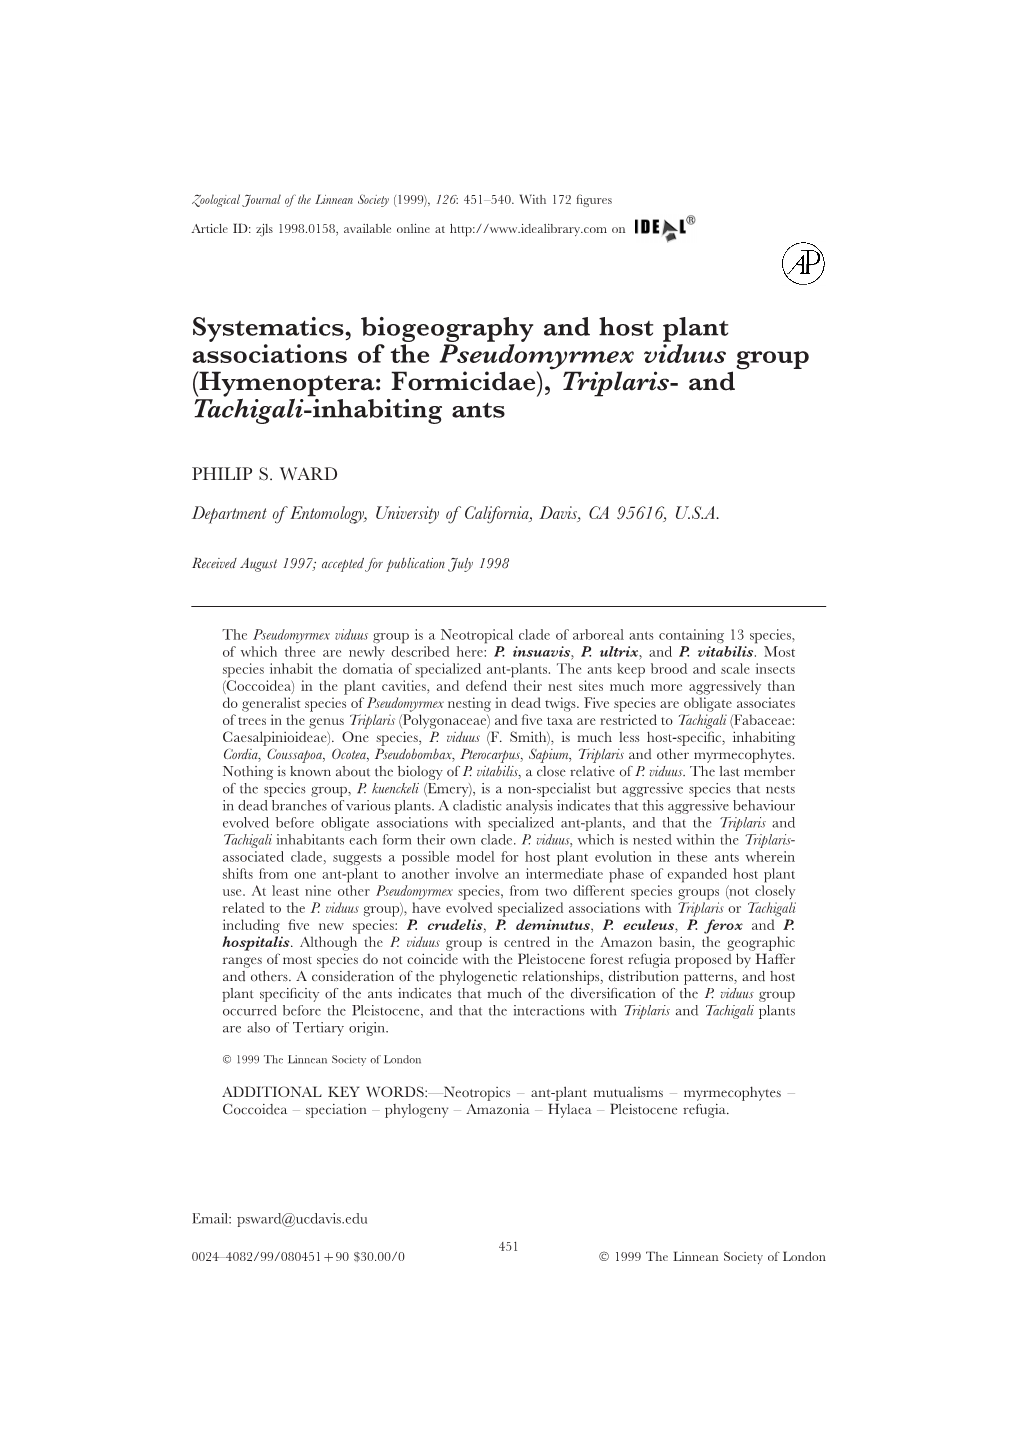 Systematics, Biogeography and Host Plant Associations of the Pseudomyrmex Viduus Group (Hymenoptera: Formicidae), Triplaris- and Tachigali-Inhabiting Ants